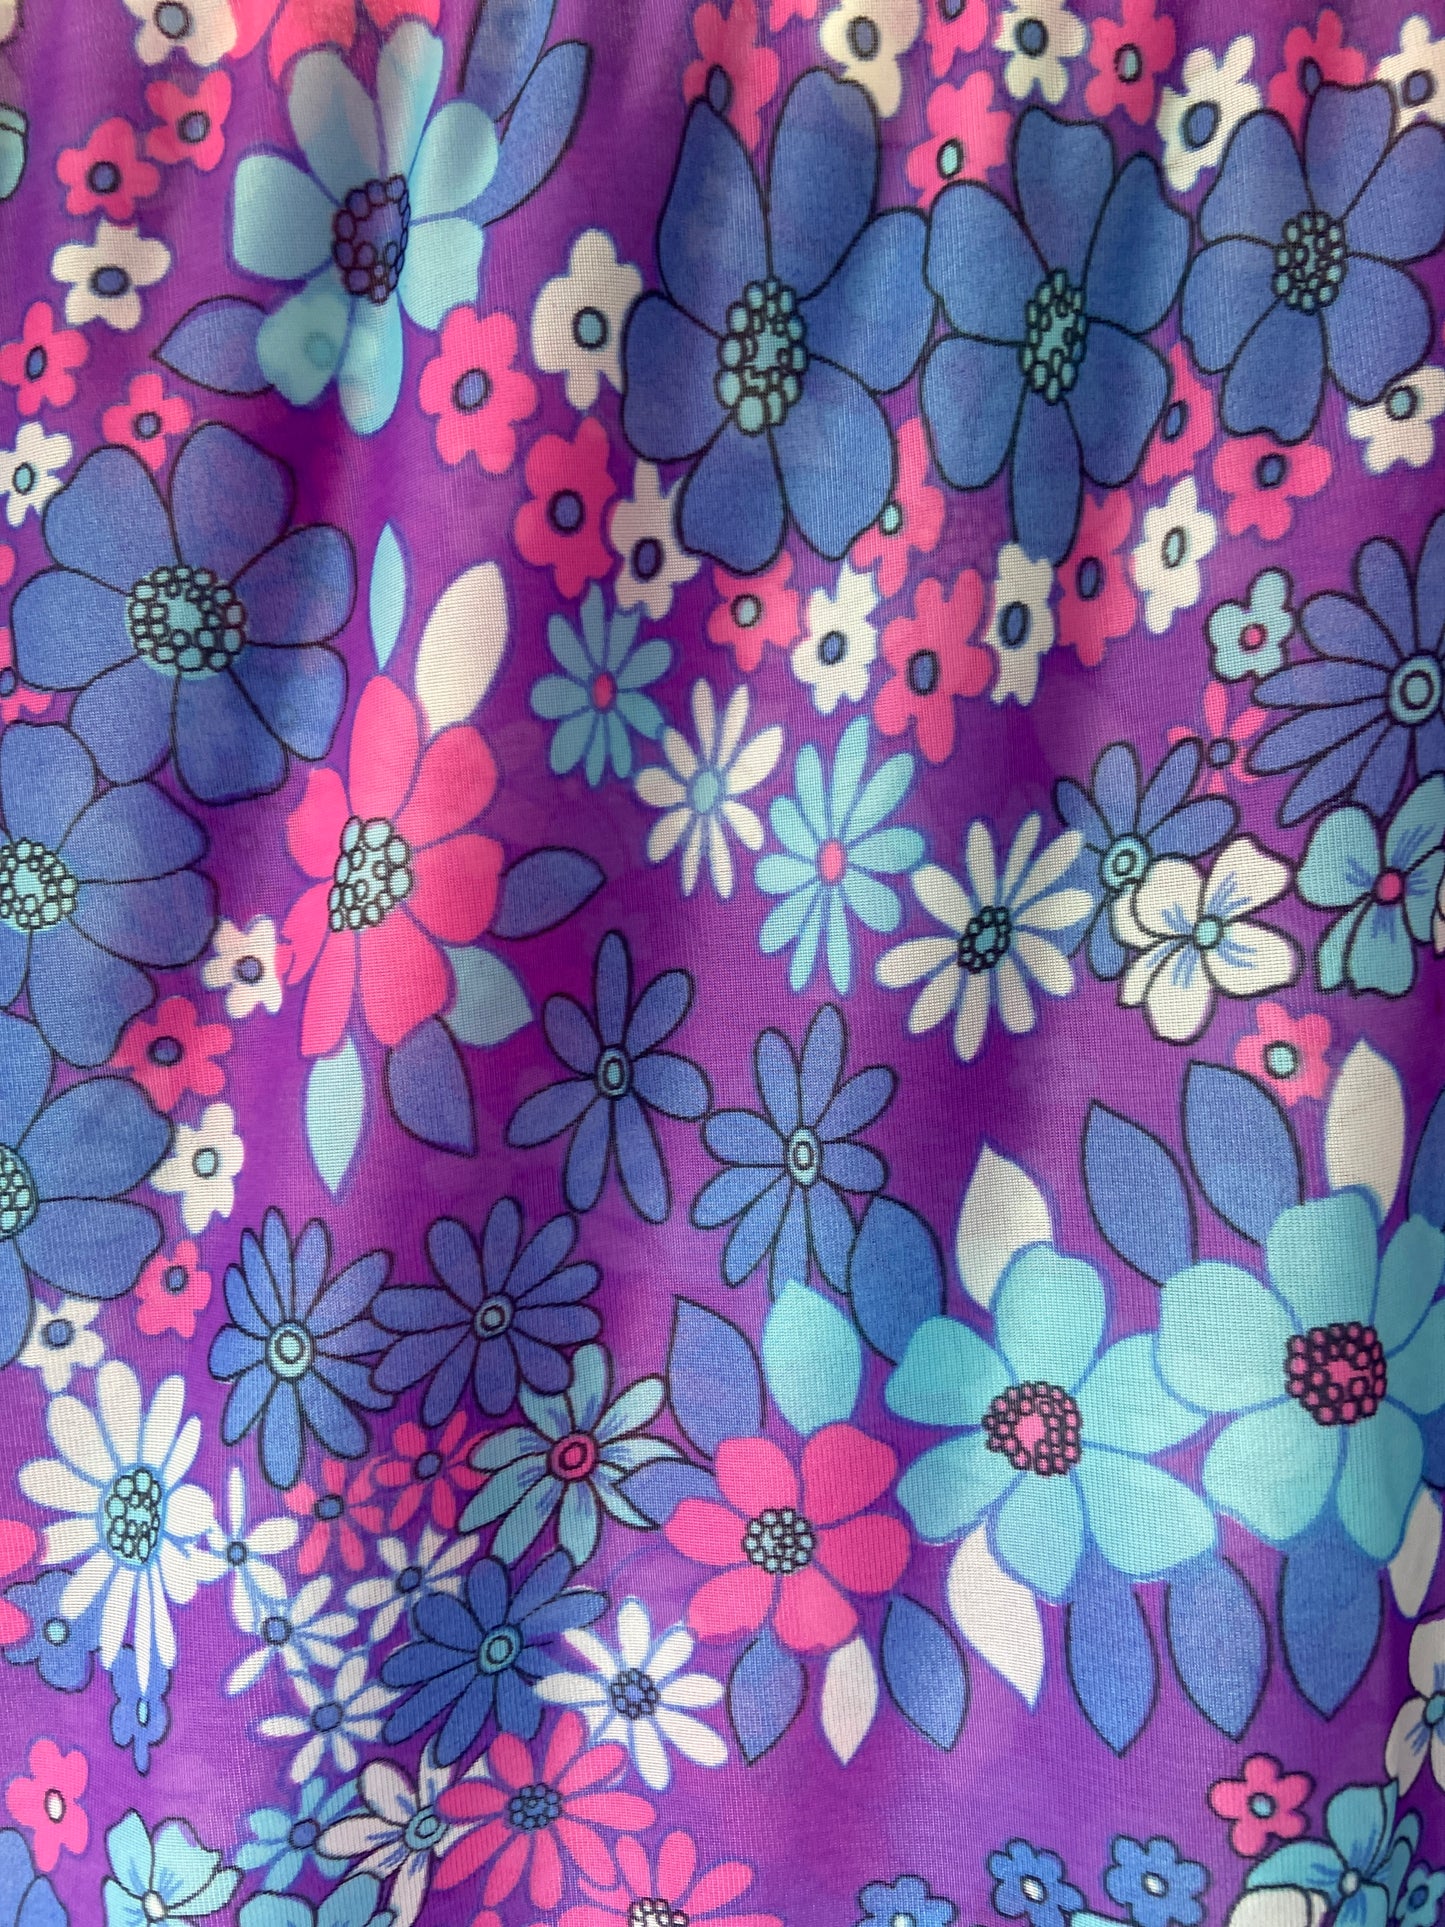 180cms Purple 70's Flower POWER Fabric Dress Shirt AMAZING Print